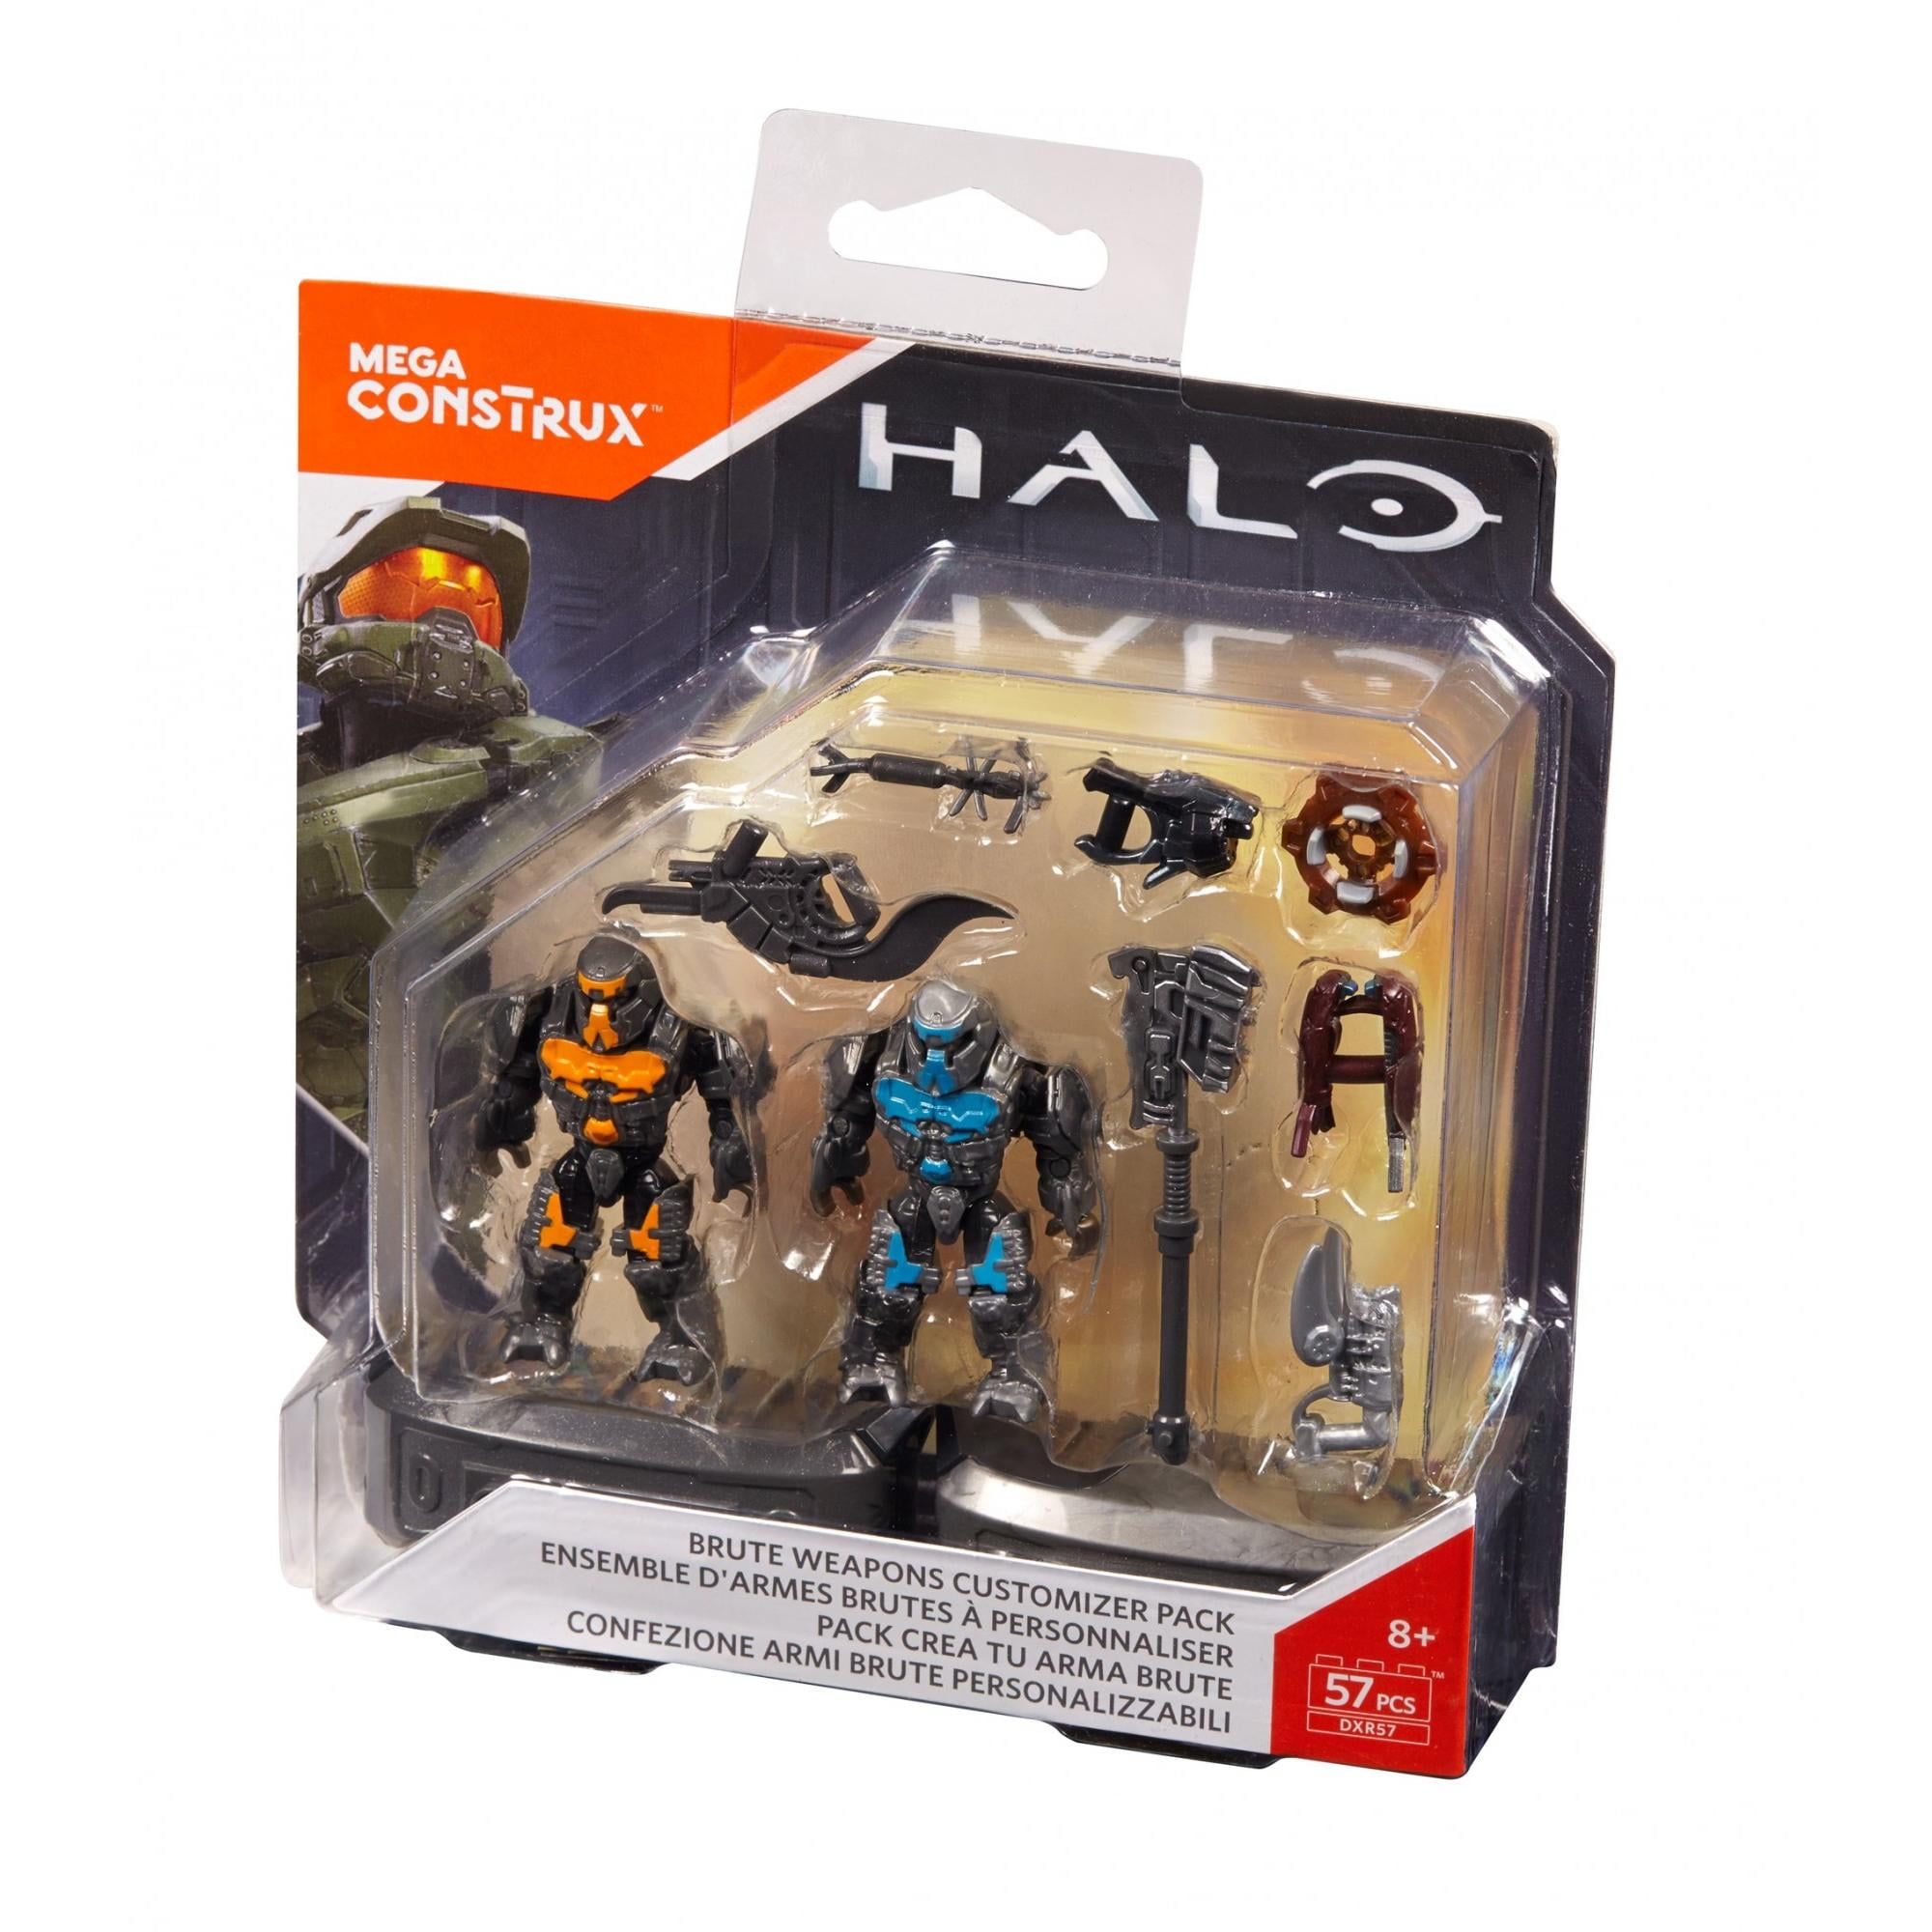 Mega  Halo Brute Weapons Customizer pack toy building blocks DXR57 